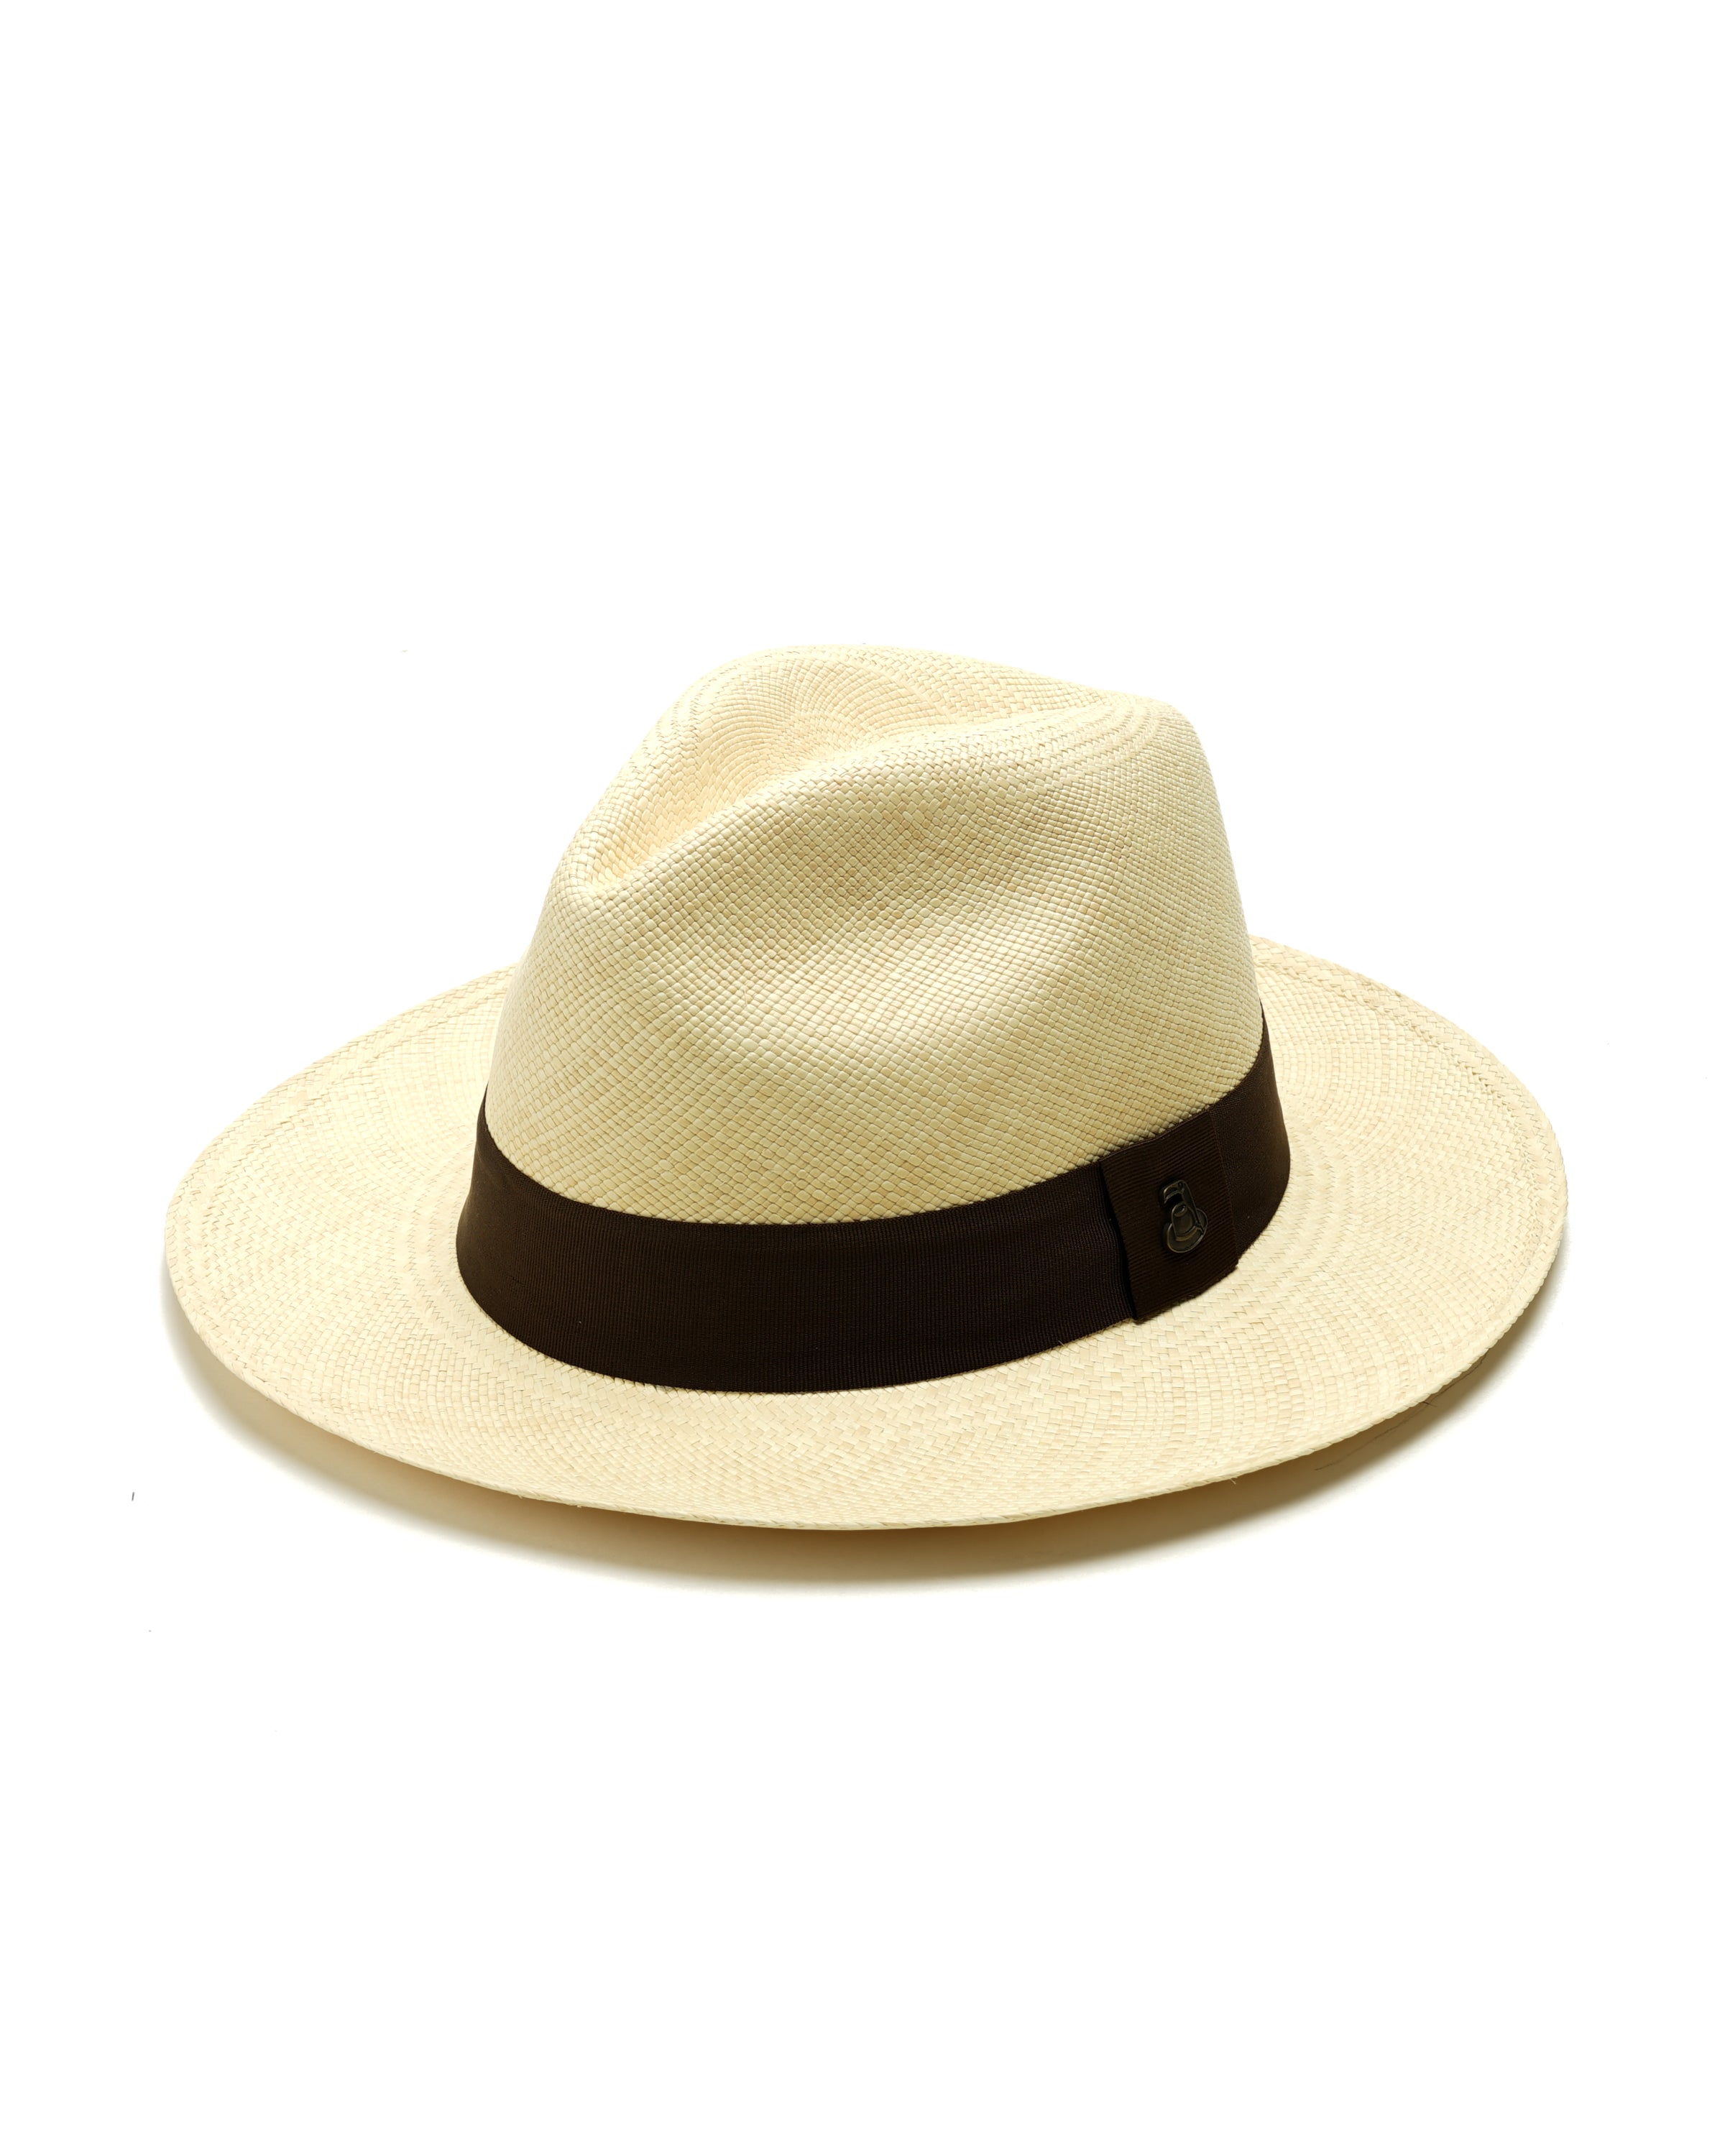 Classic Panama Hat - Beige